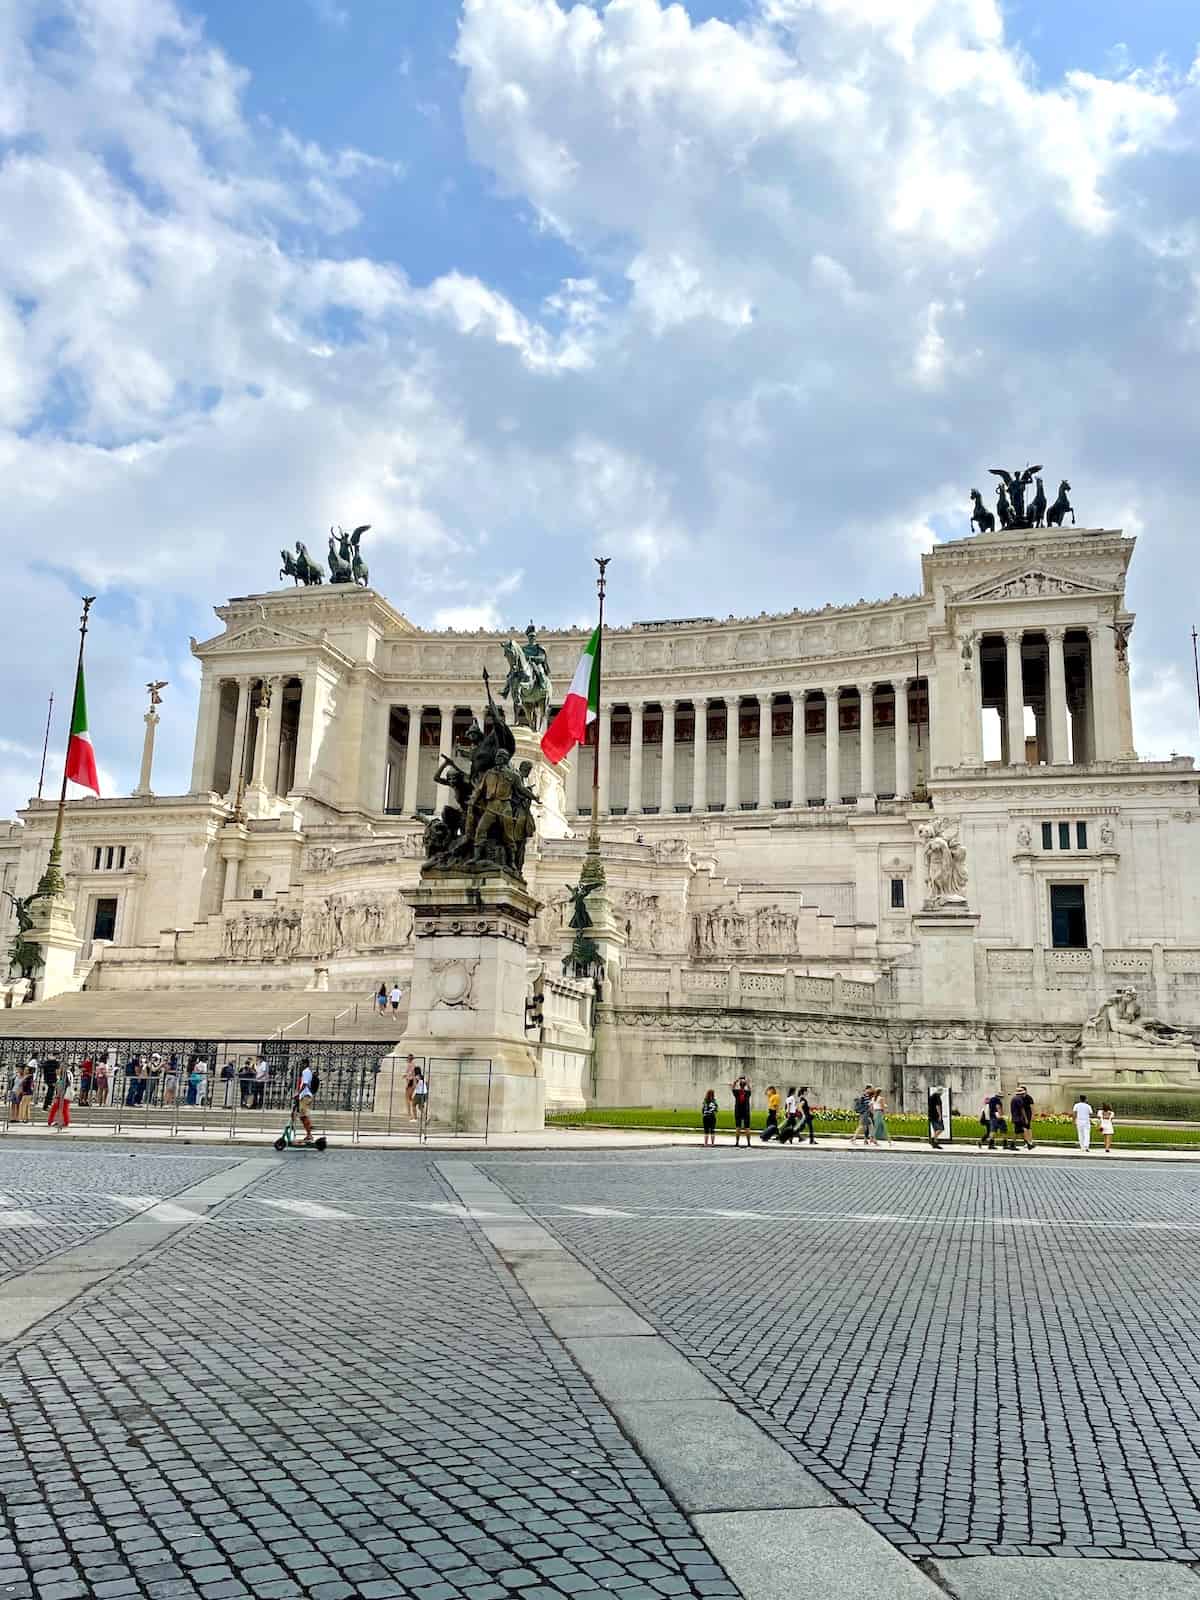 Historic building in Rome.